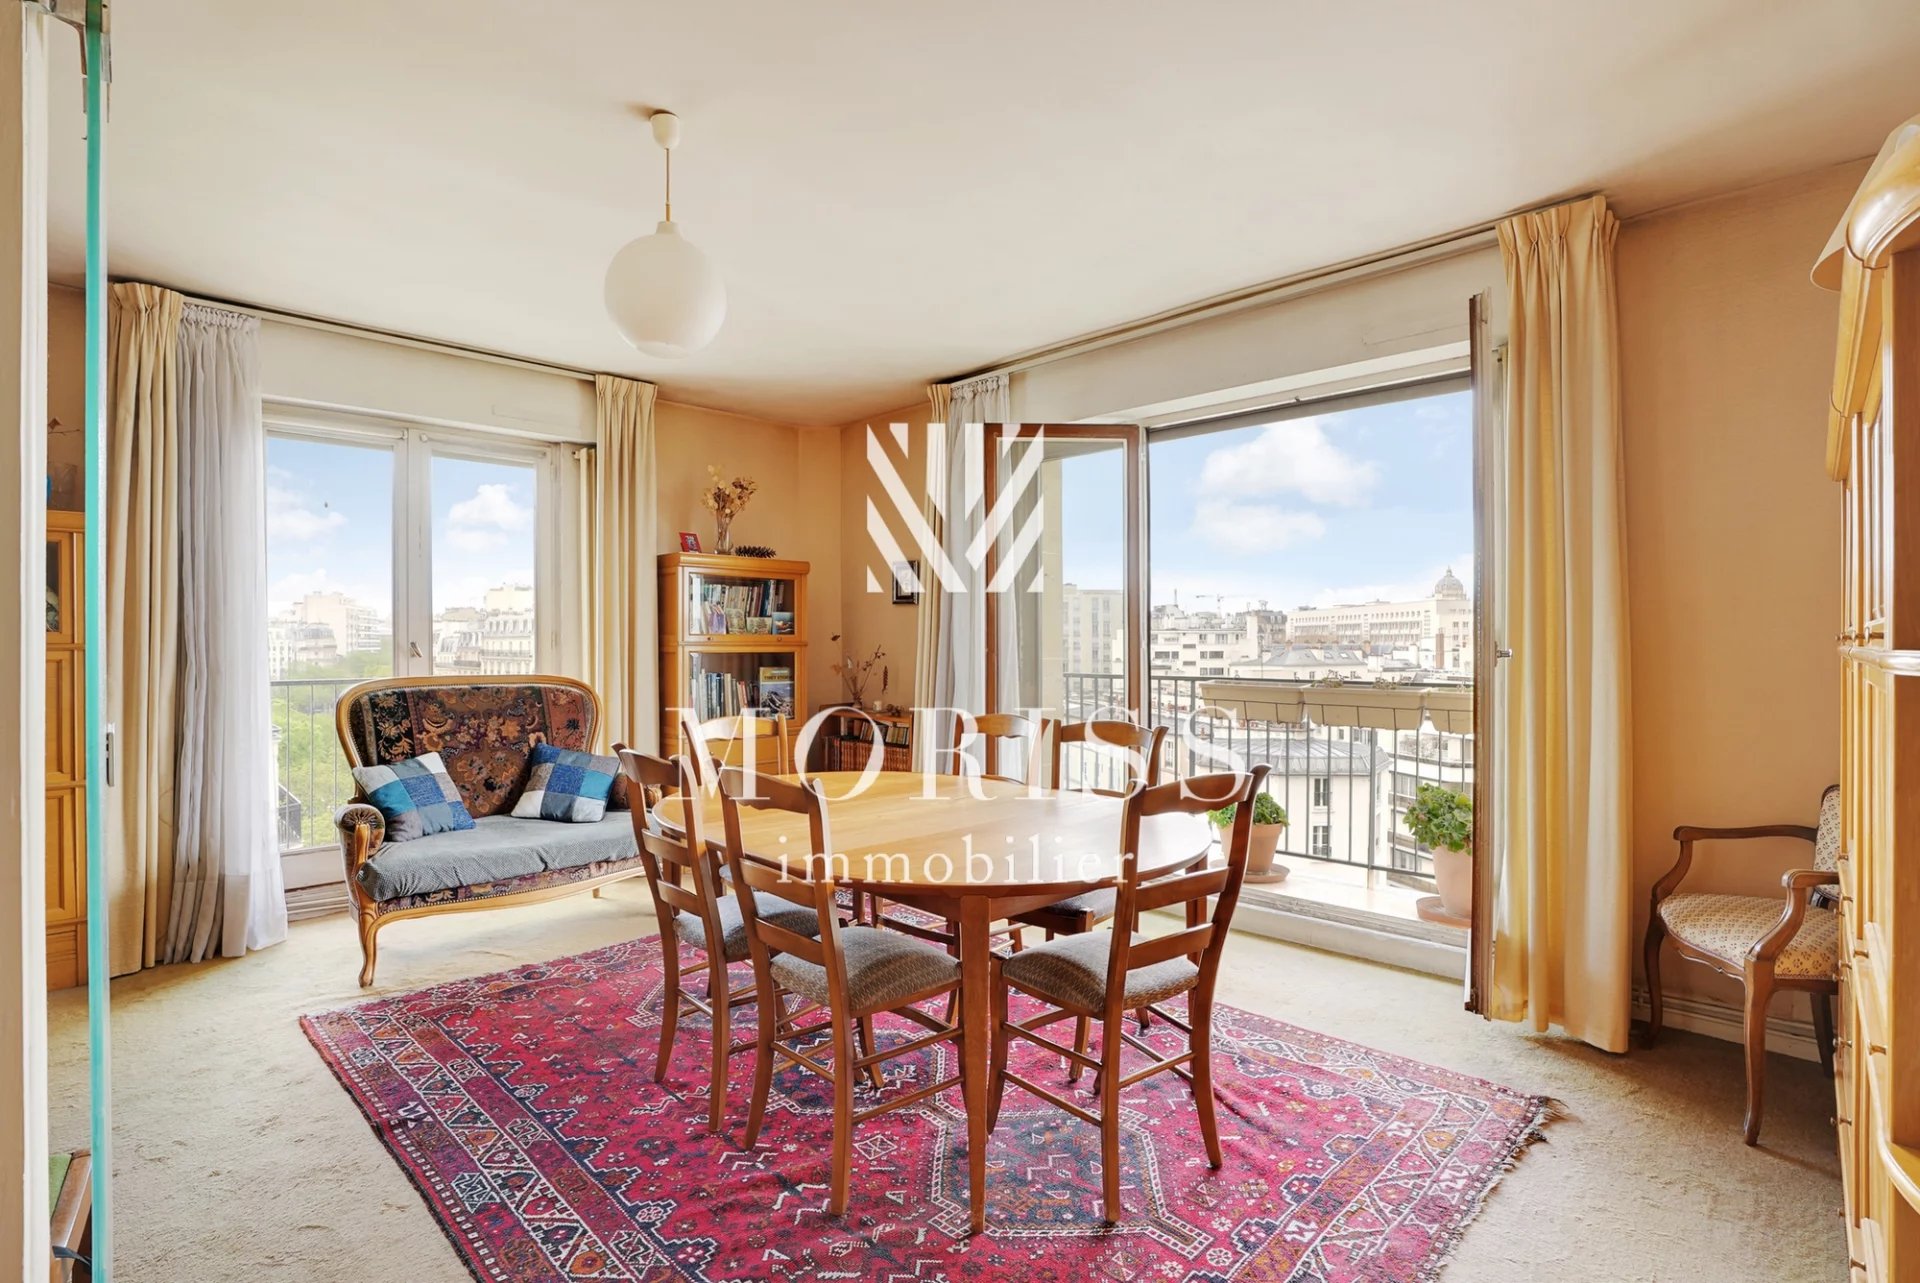 Appartement familial - 92m2 avec balcon / Croulebarbe - Image 1